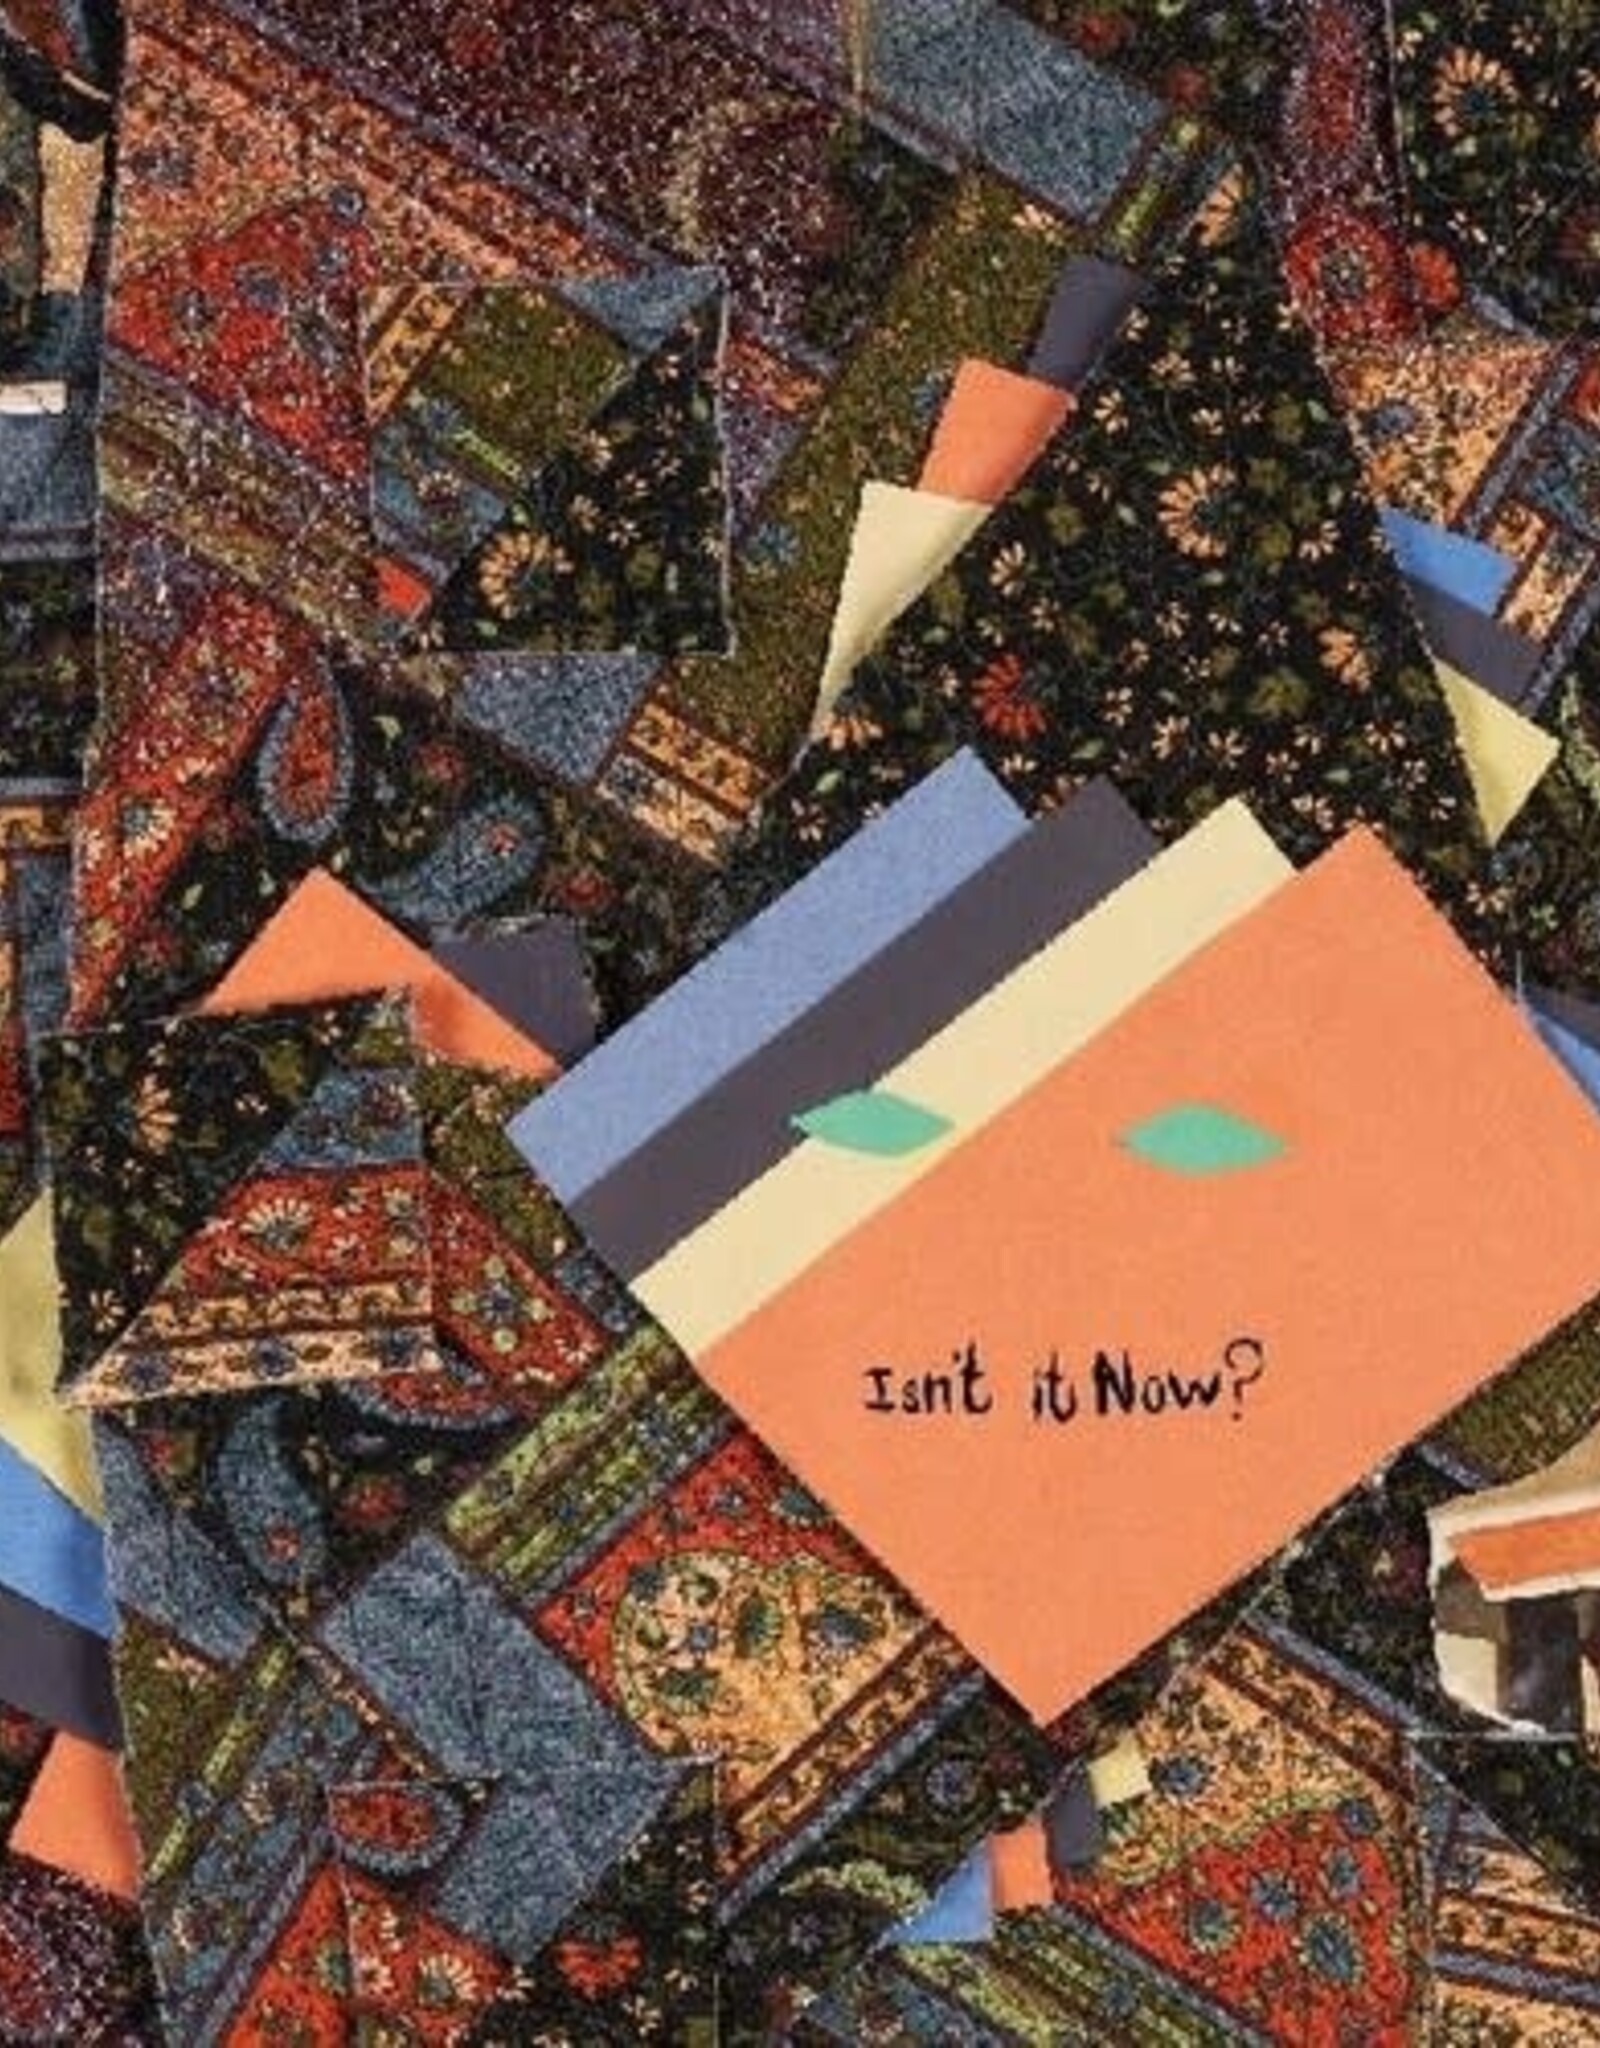 Animal Collective - Isn't It Now? (Indie Exclusive, Orange Vinyl)